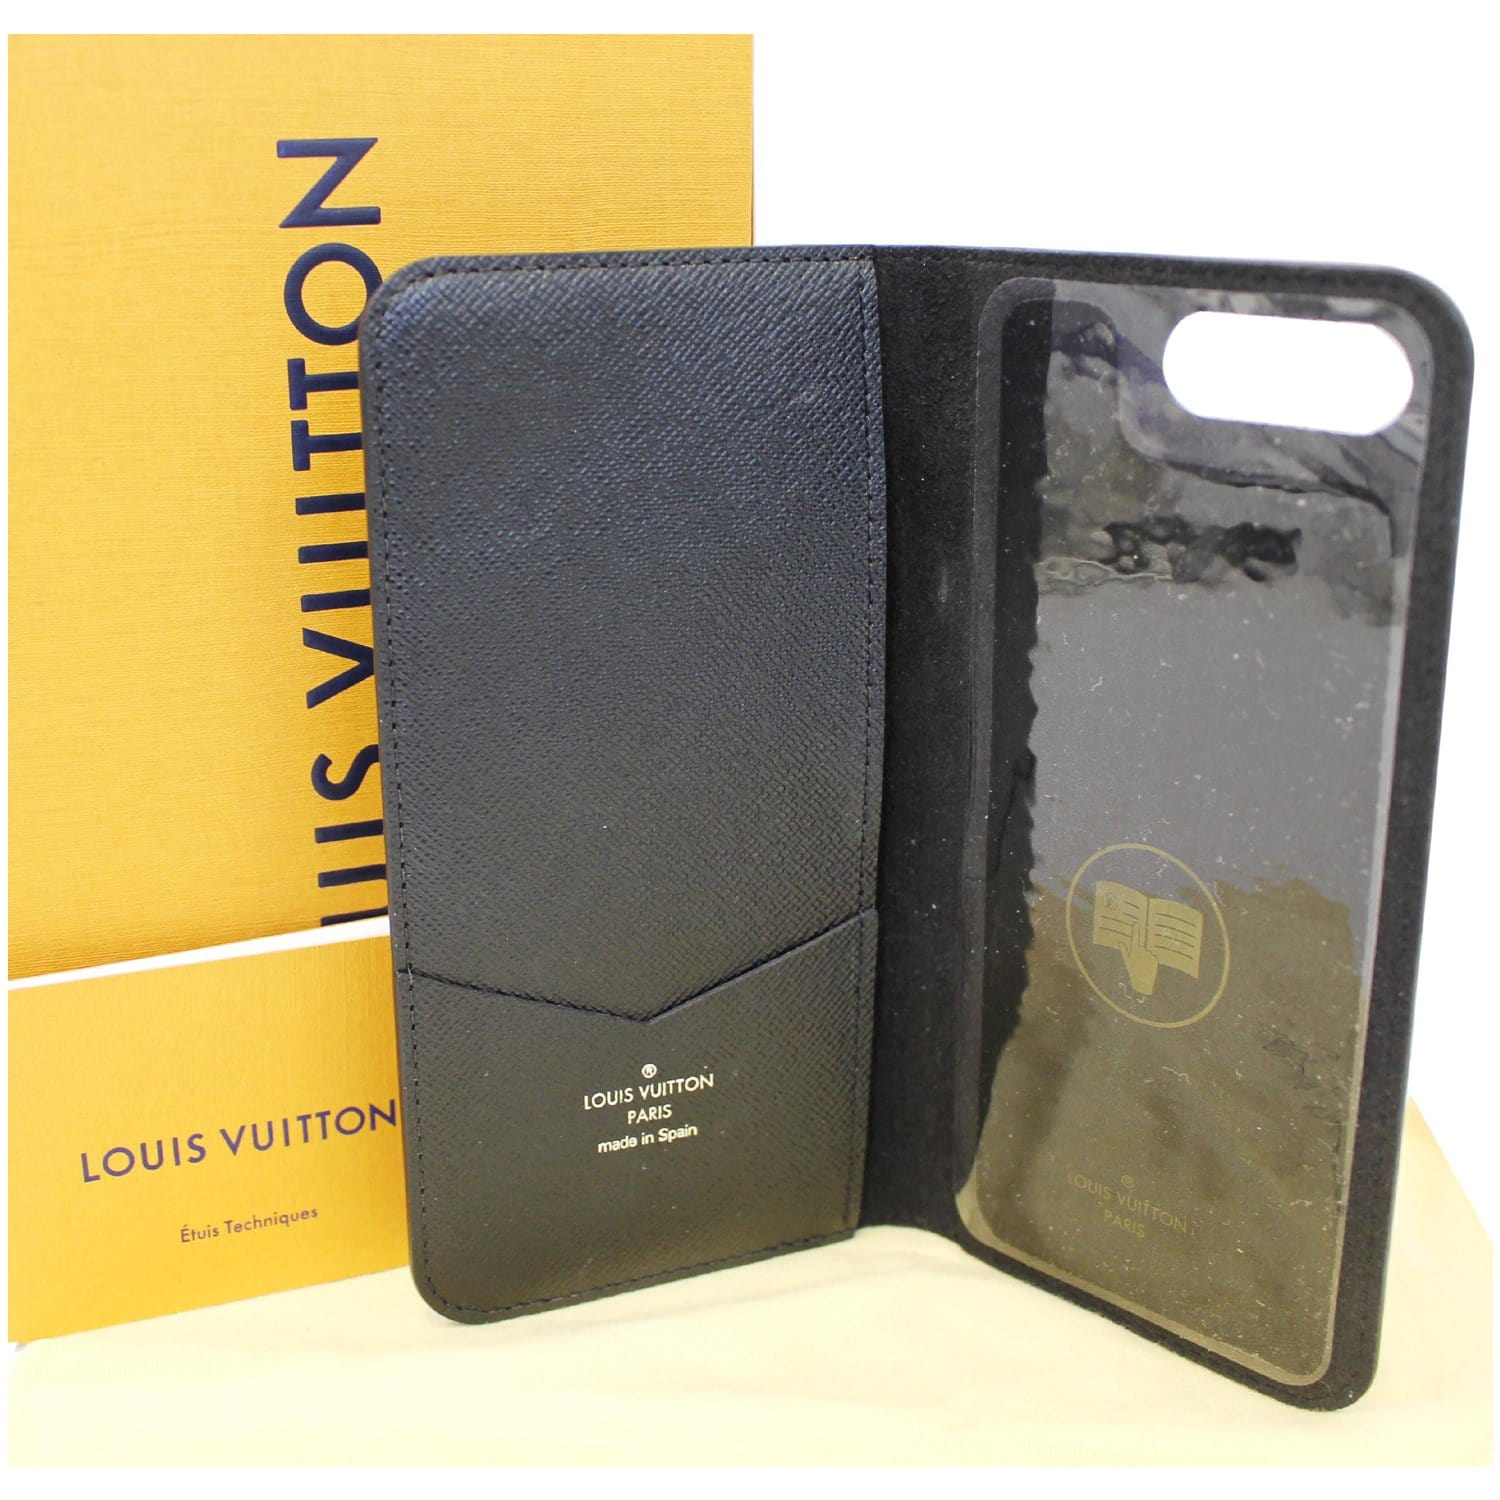 LOUIS VUITTON Other accessories M61906 iPhone 7, 8, SE Case Folio